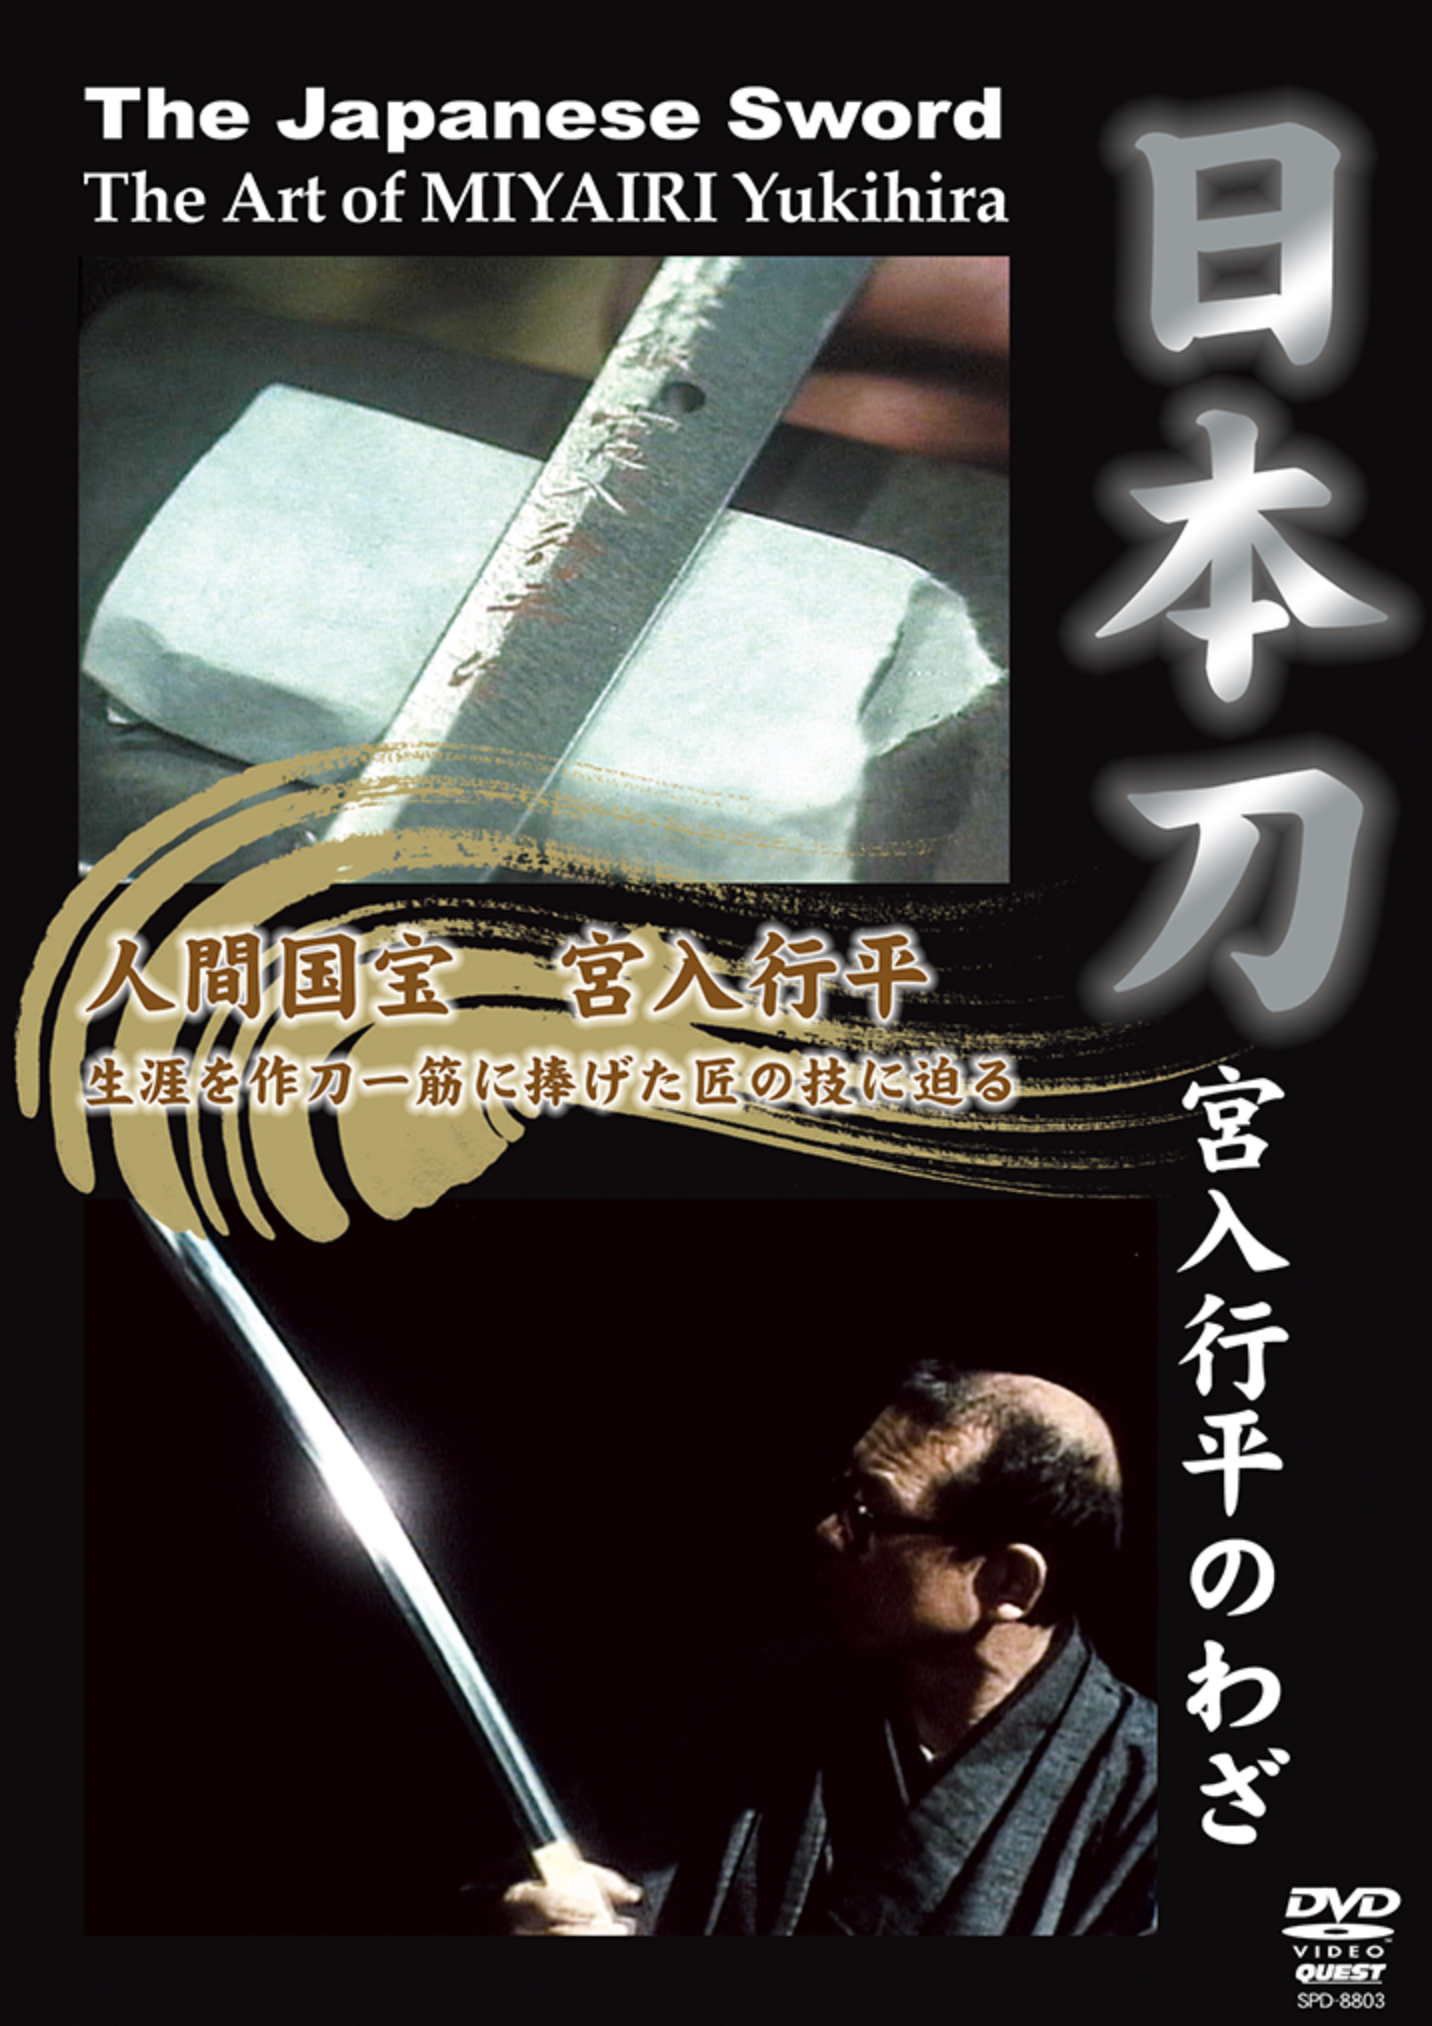 Japanese Sword: Art of Miyairi Yukihara DVD - Budovideos Inc